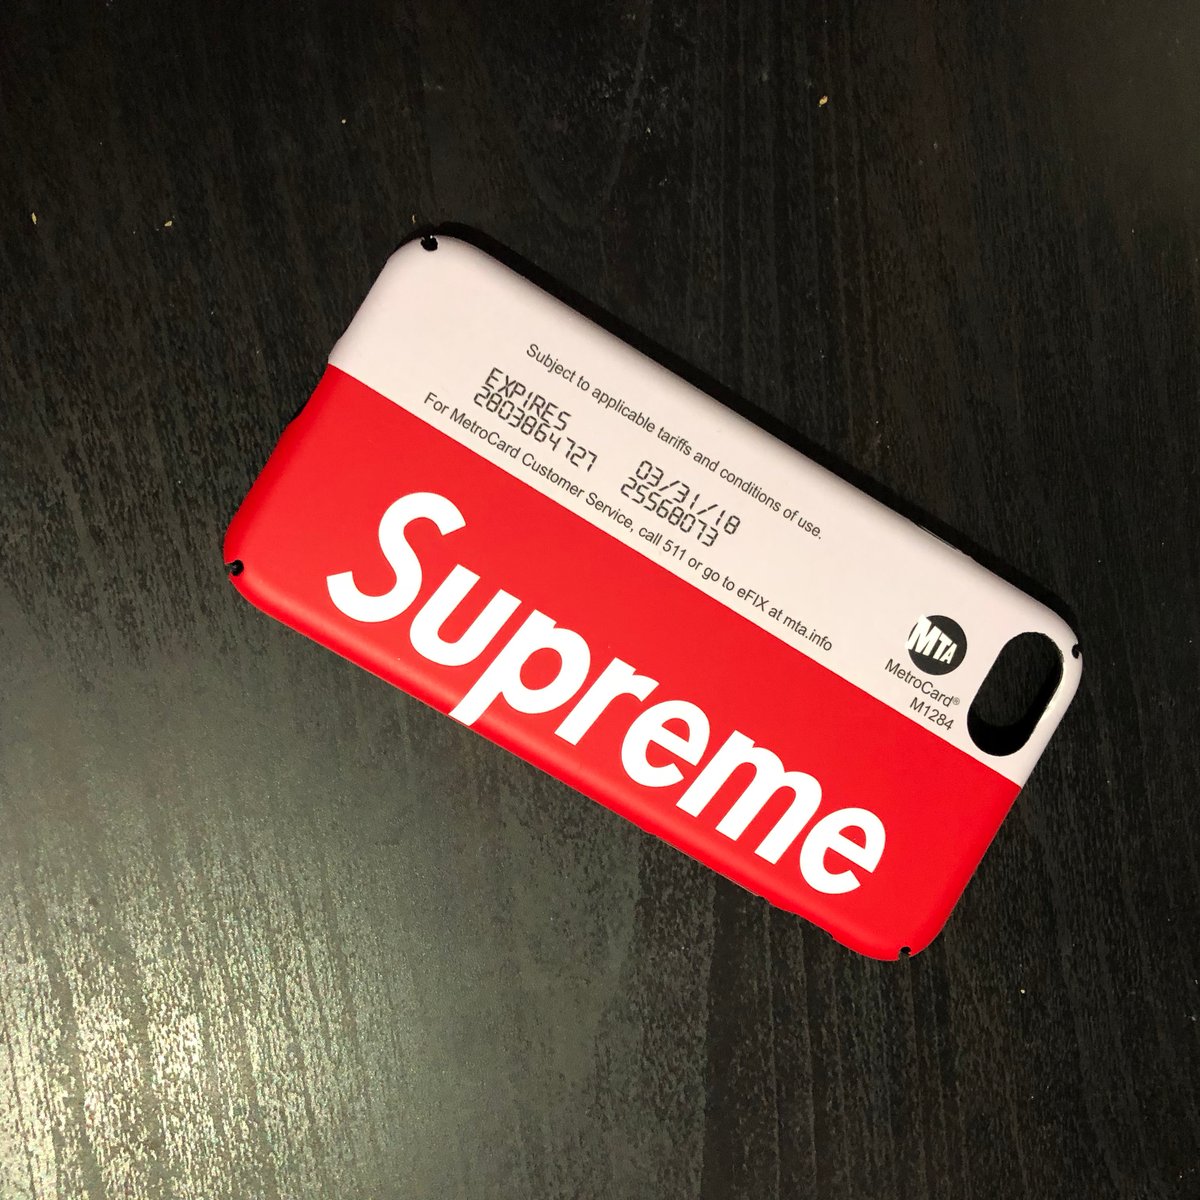 Supreme New York Metro Card iPhone 11 Case